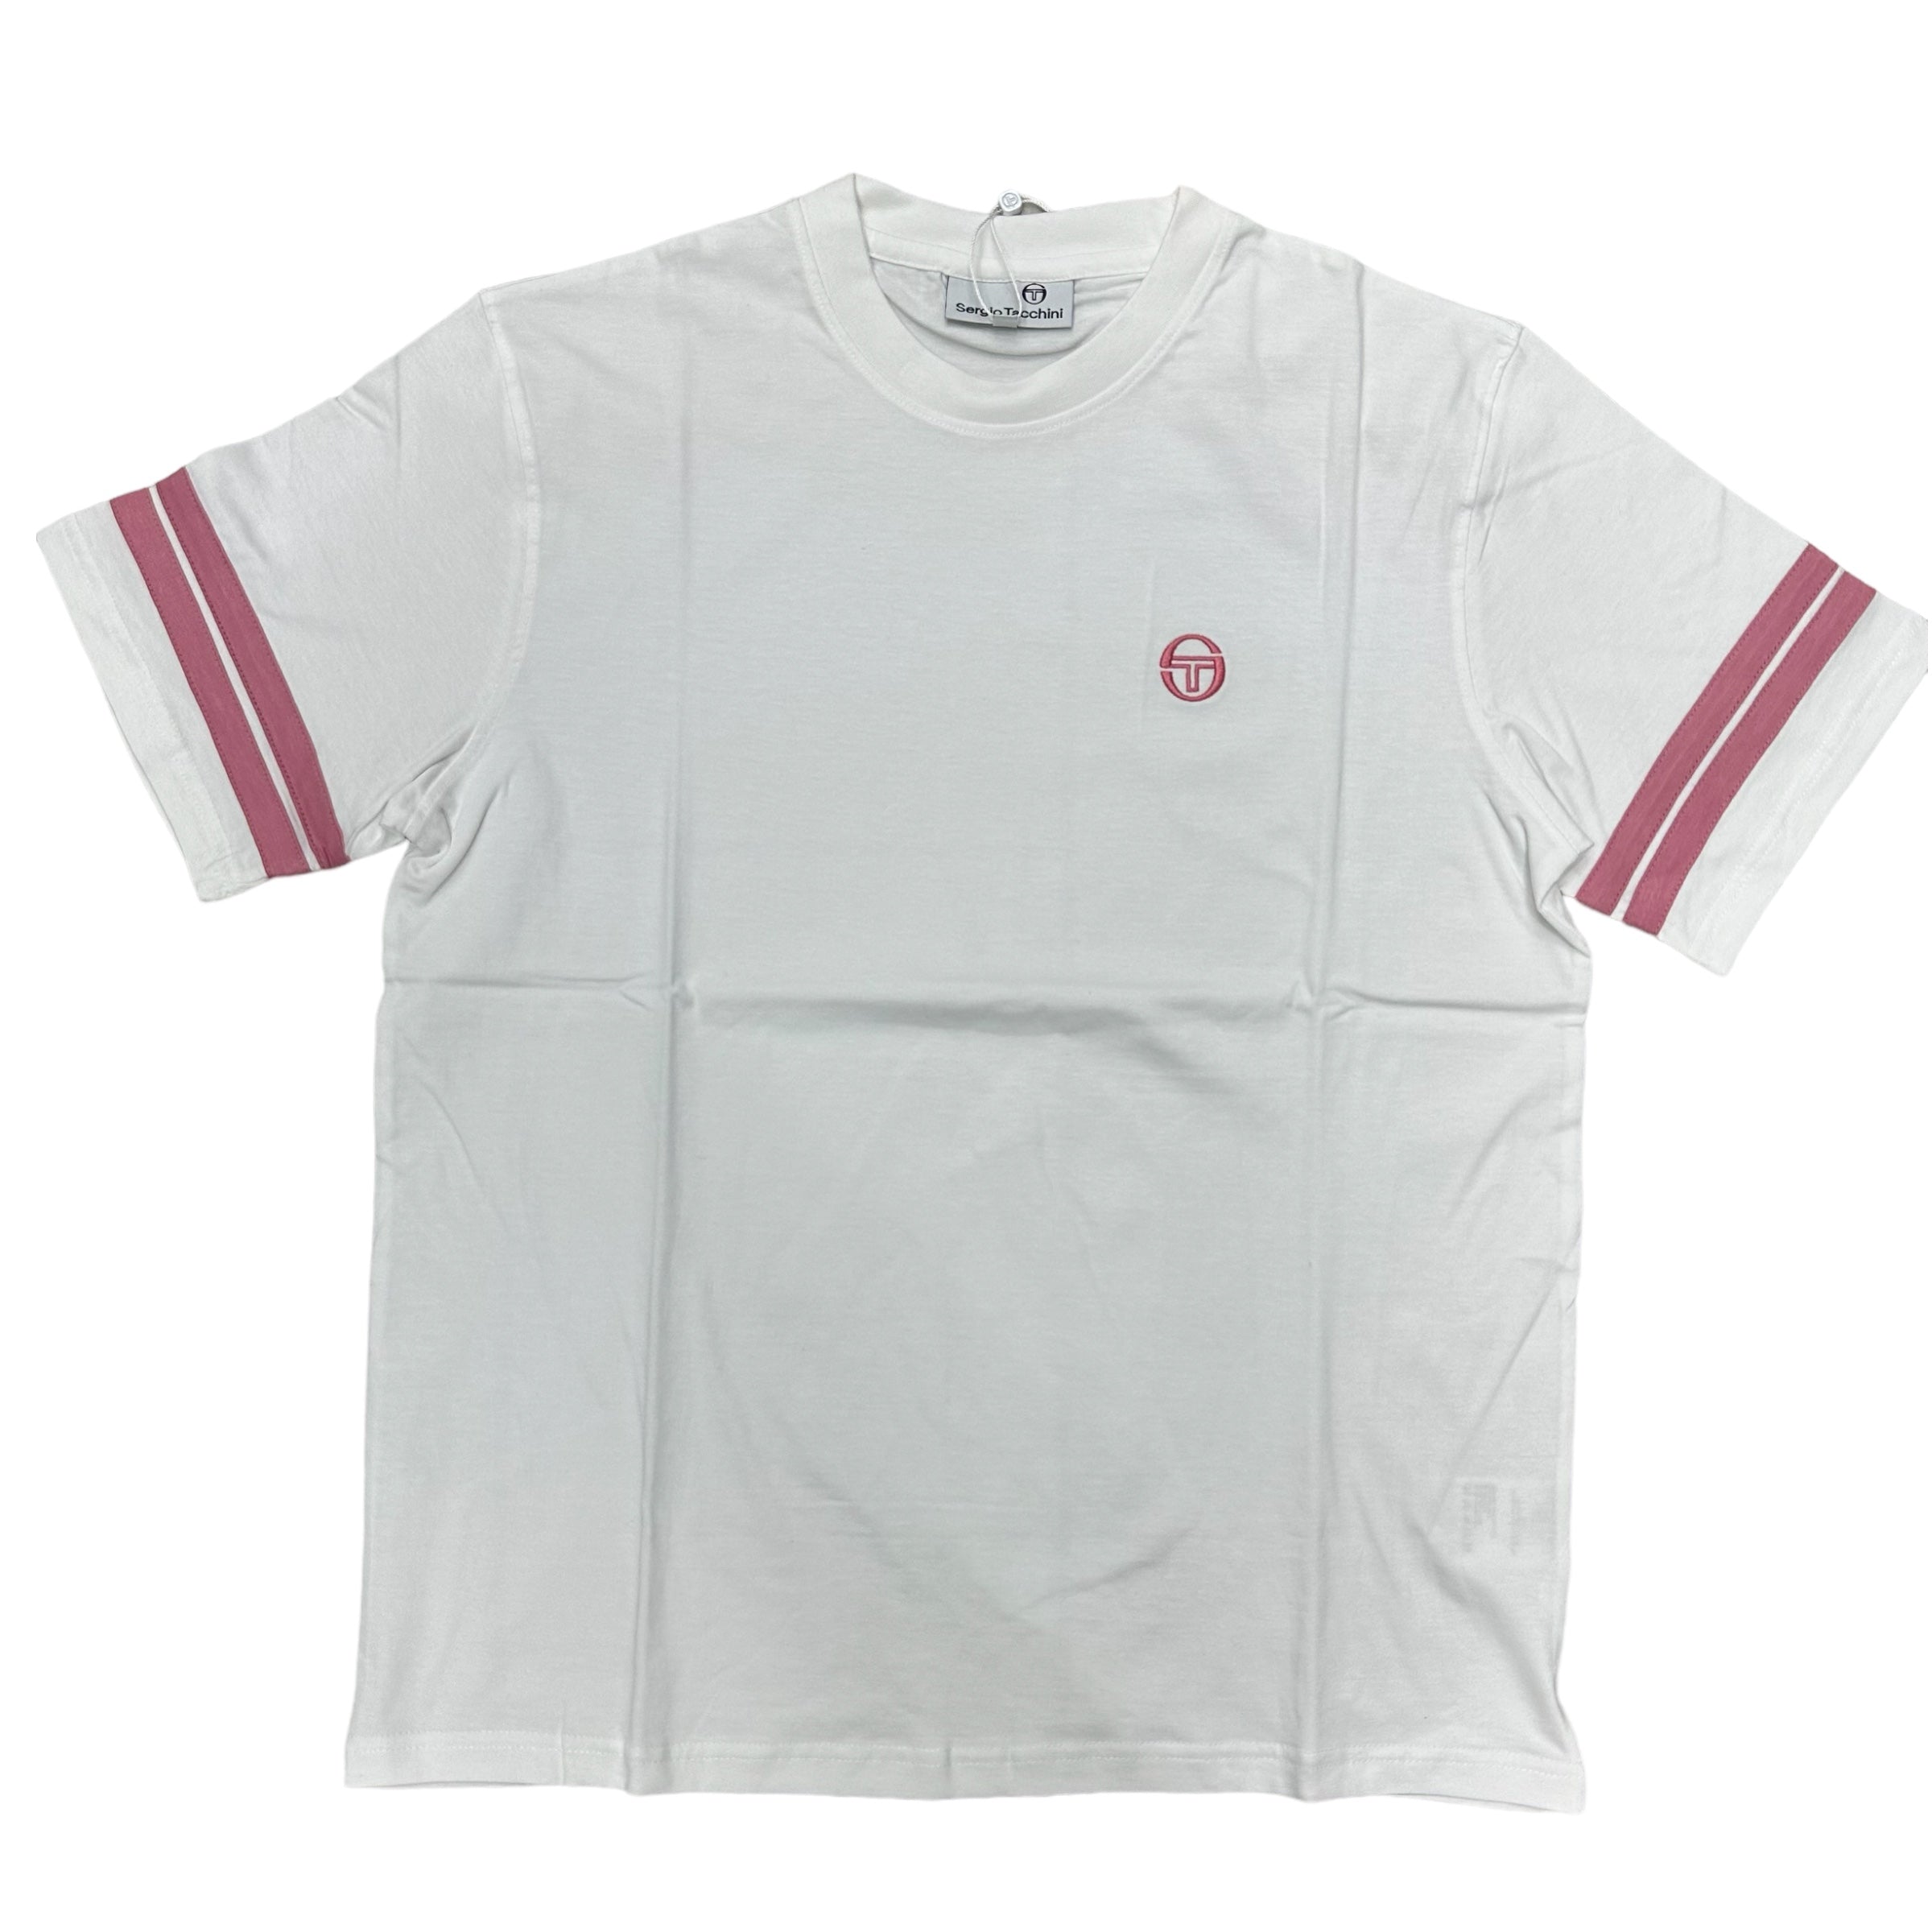 Sergio Tacchini T-shirt White Pink Stripe